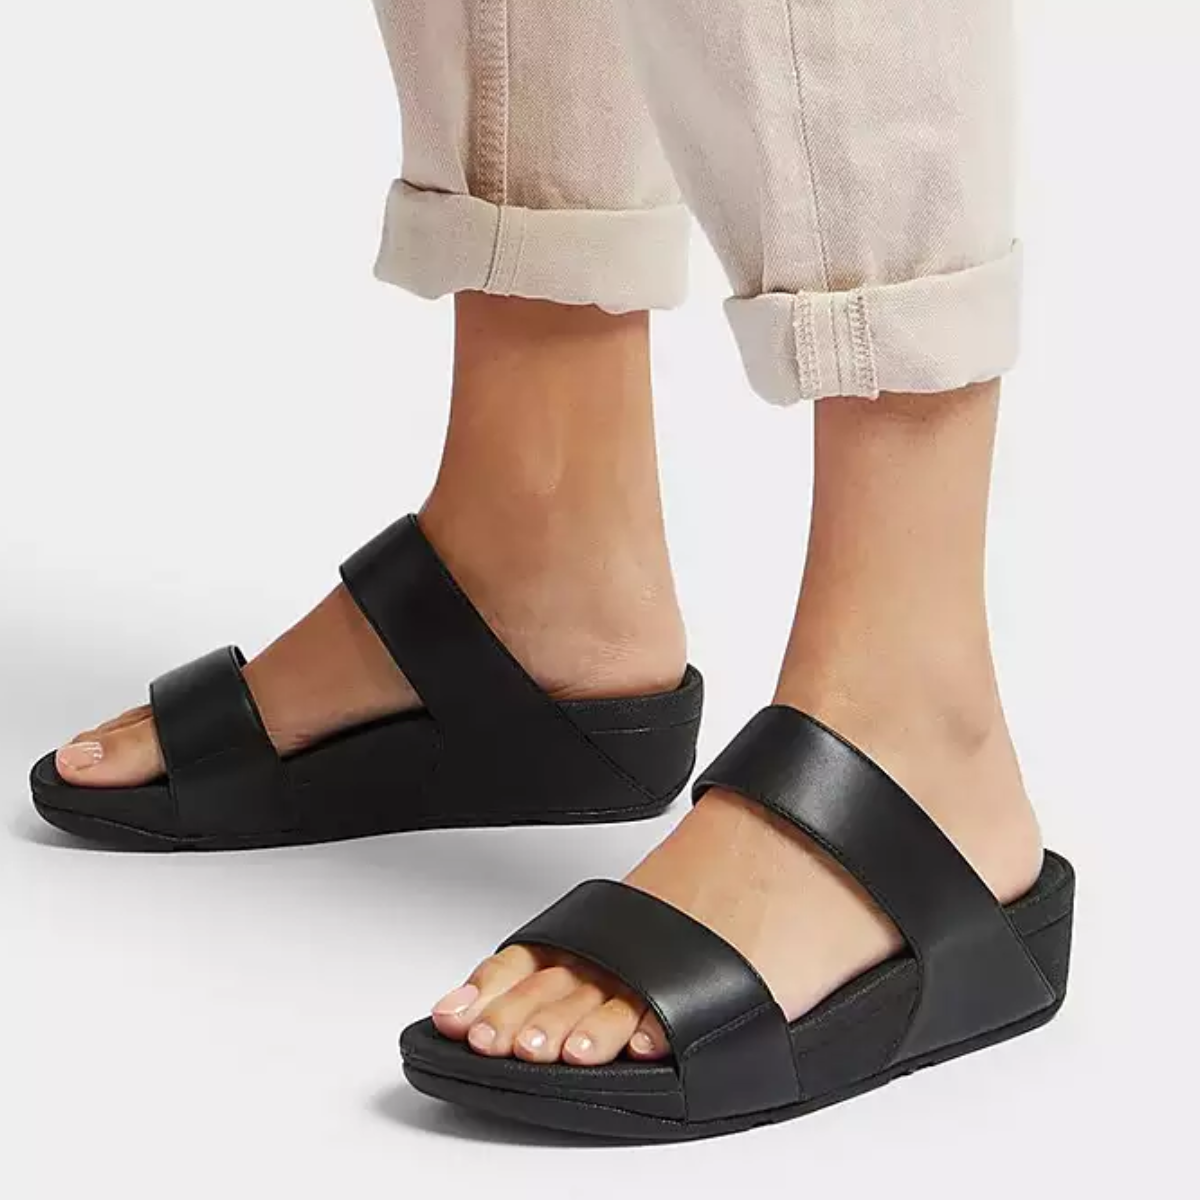 A woman's Lulu Adjustable Leather slide in Black sandals by Flipflops & Whatnots.